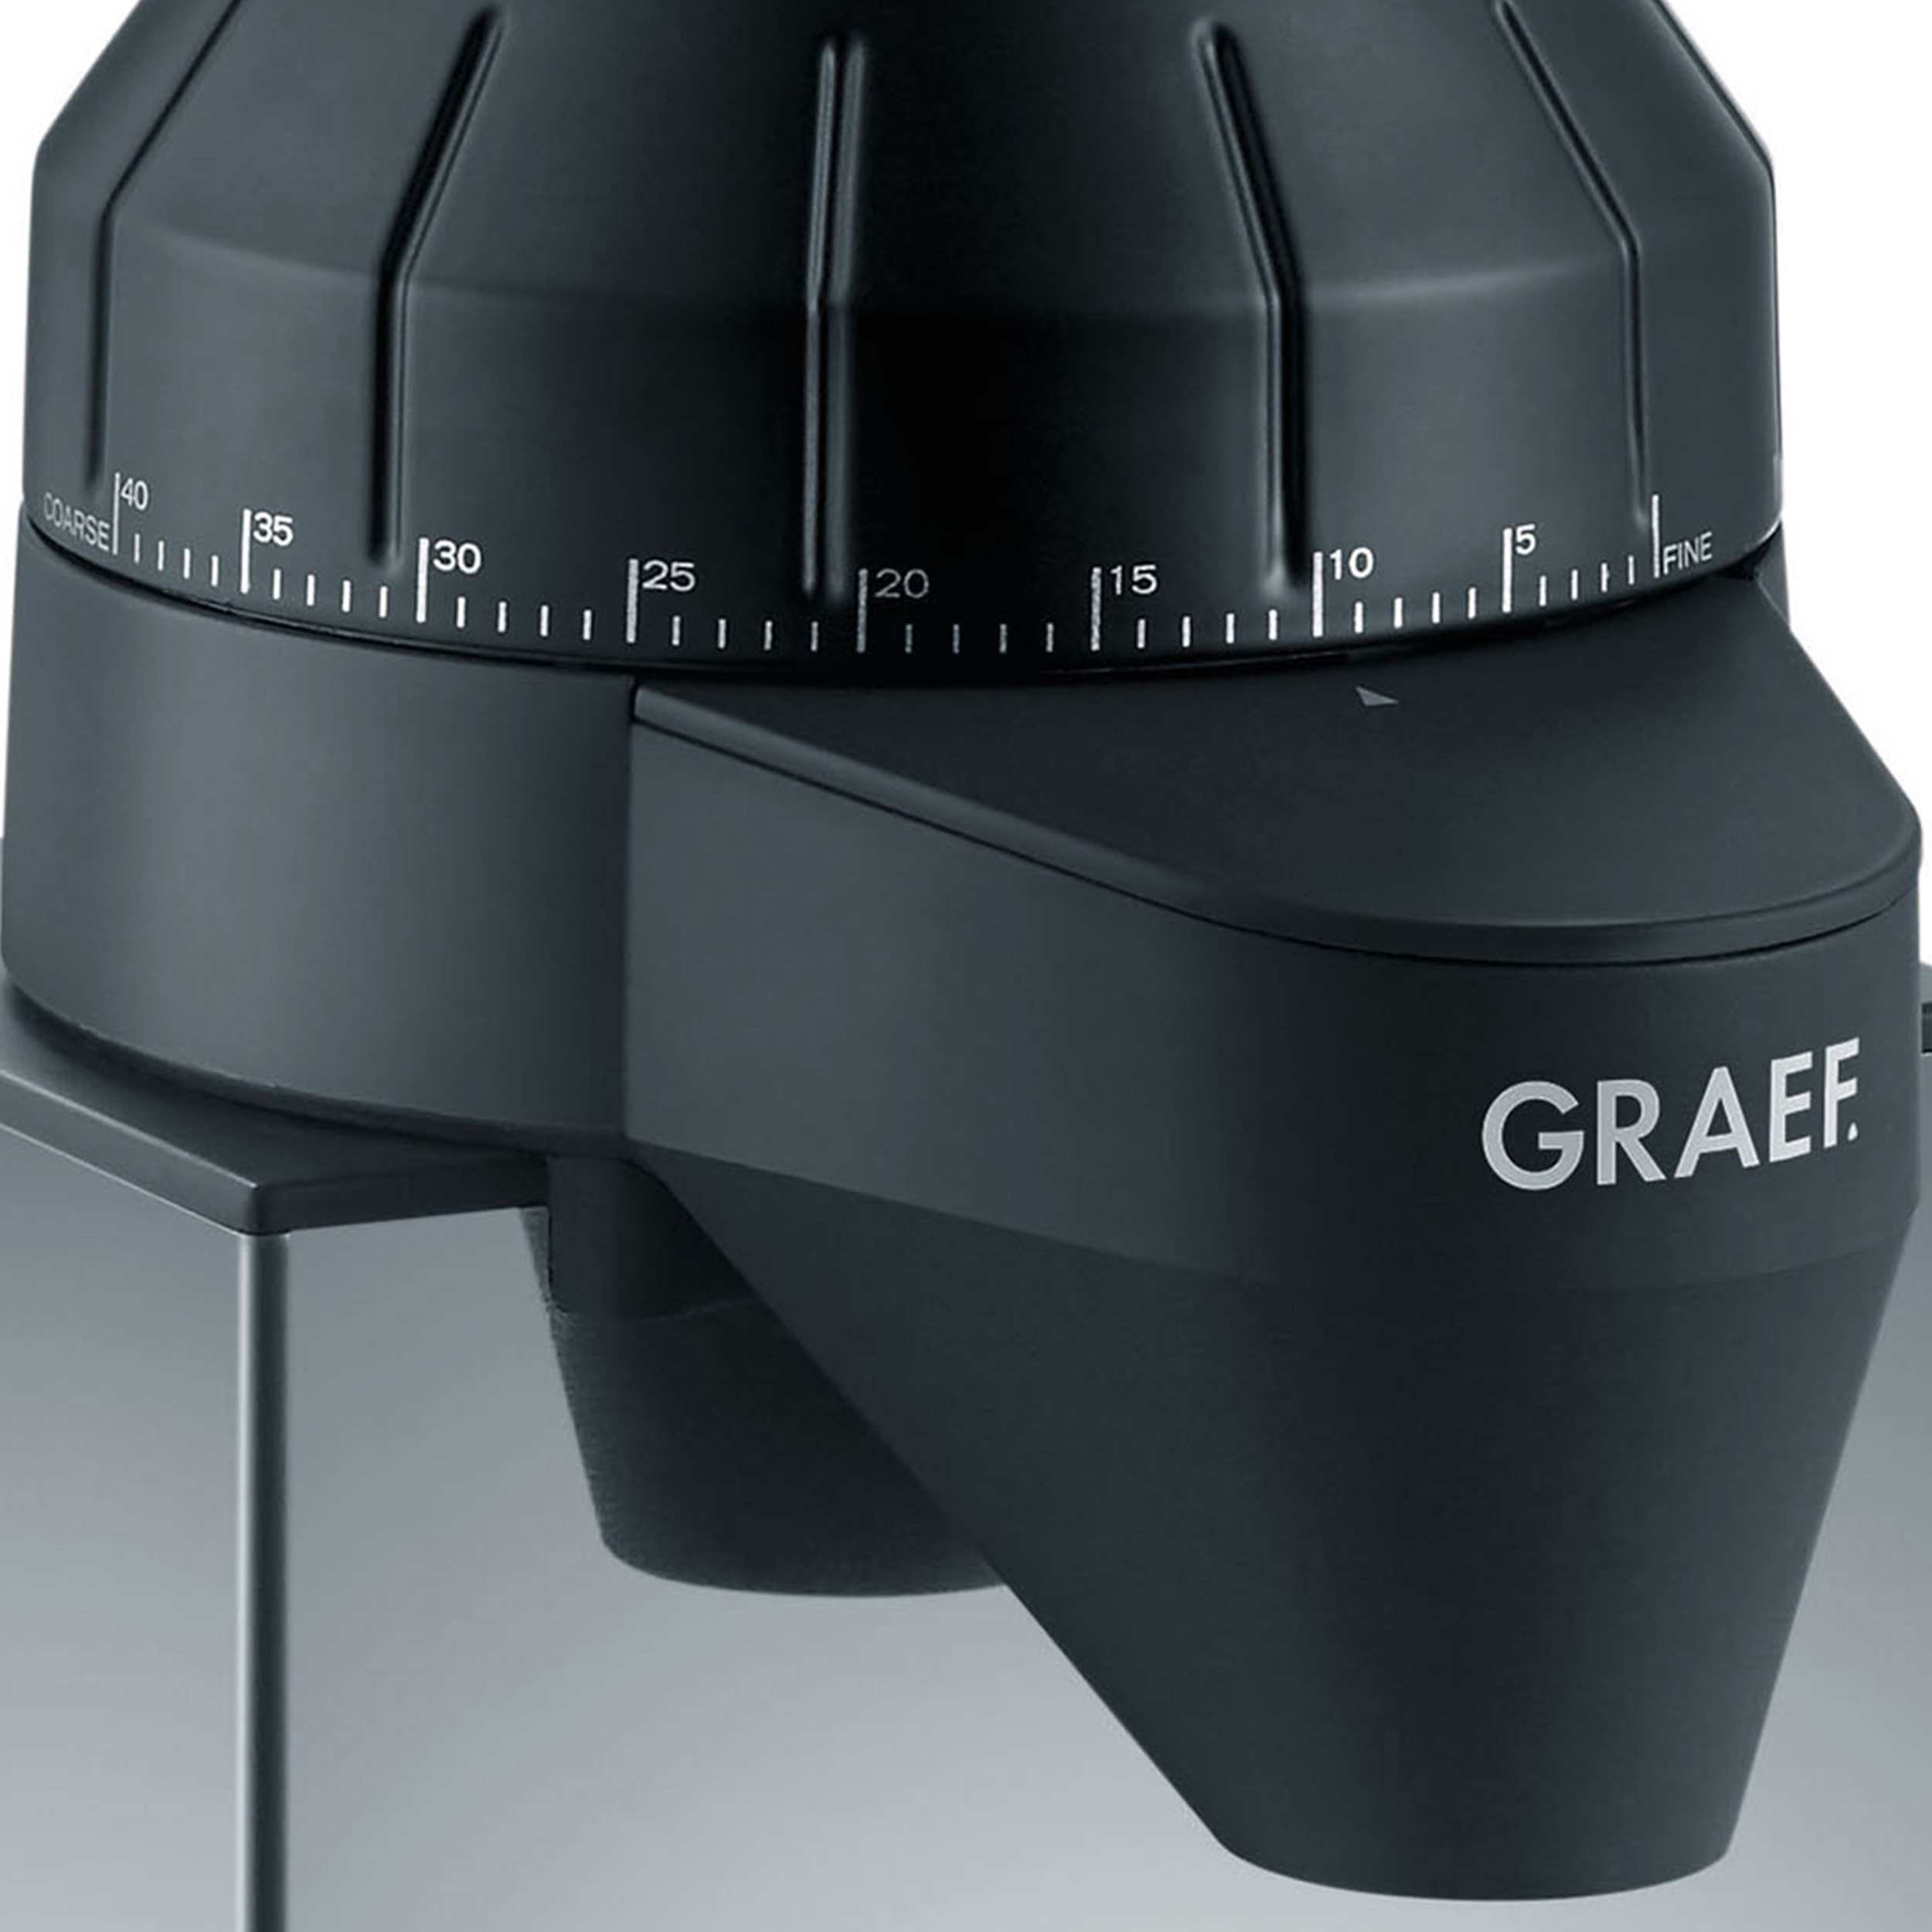 GRAEF CM 820 128 Hochglanz-Edelstahl Watt, Edelstahl-Kegelmahlwerk Kaffeemühle